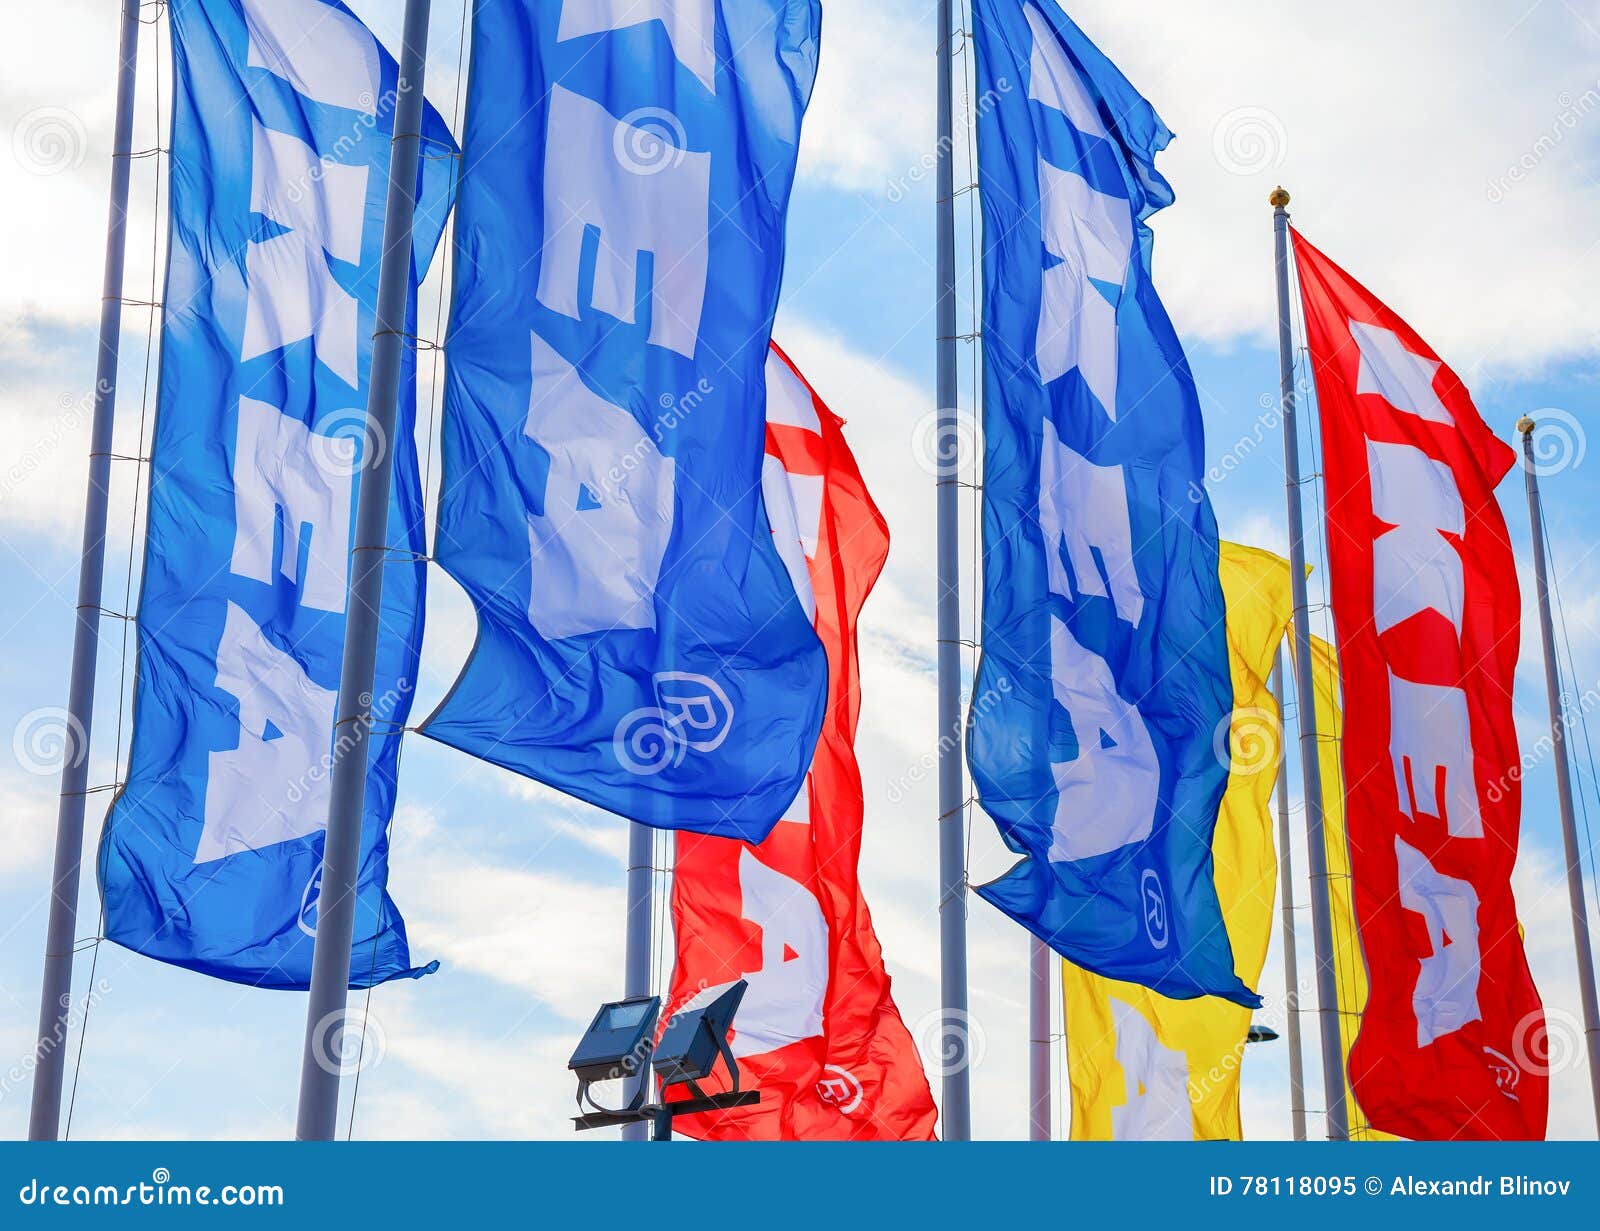 IKEA Flags Against A Blue Sky Near The IKEA Samara Store Editorial Image - Image of modern ...